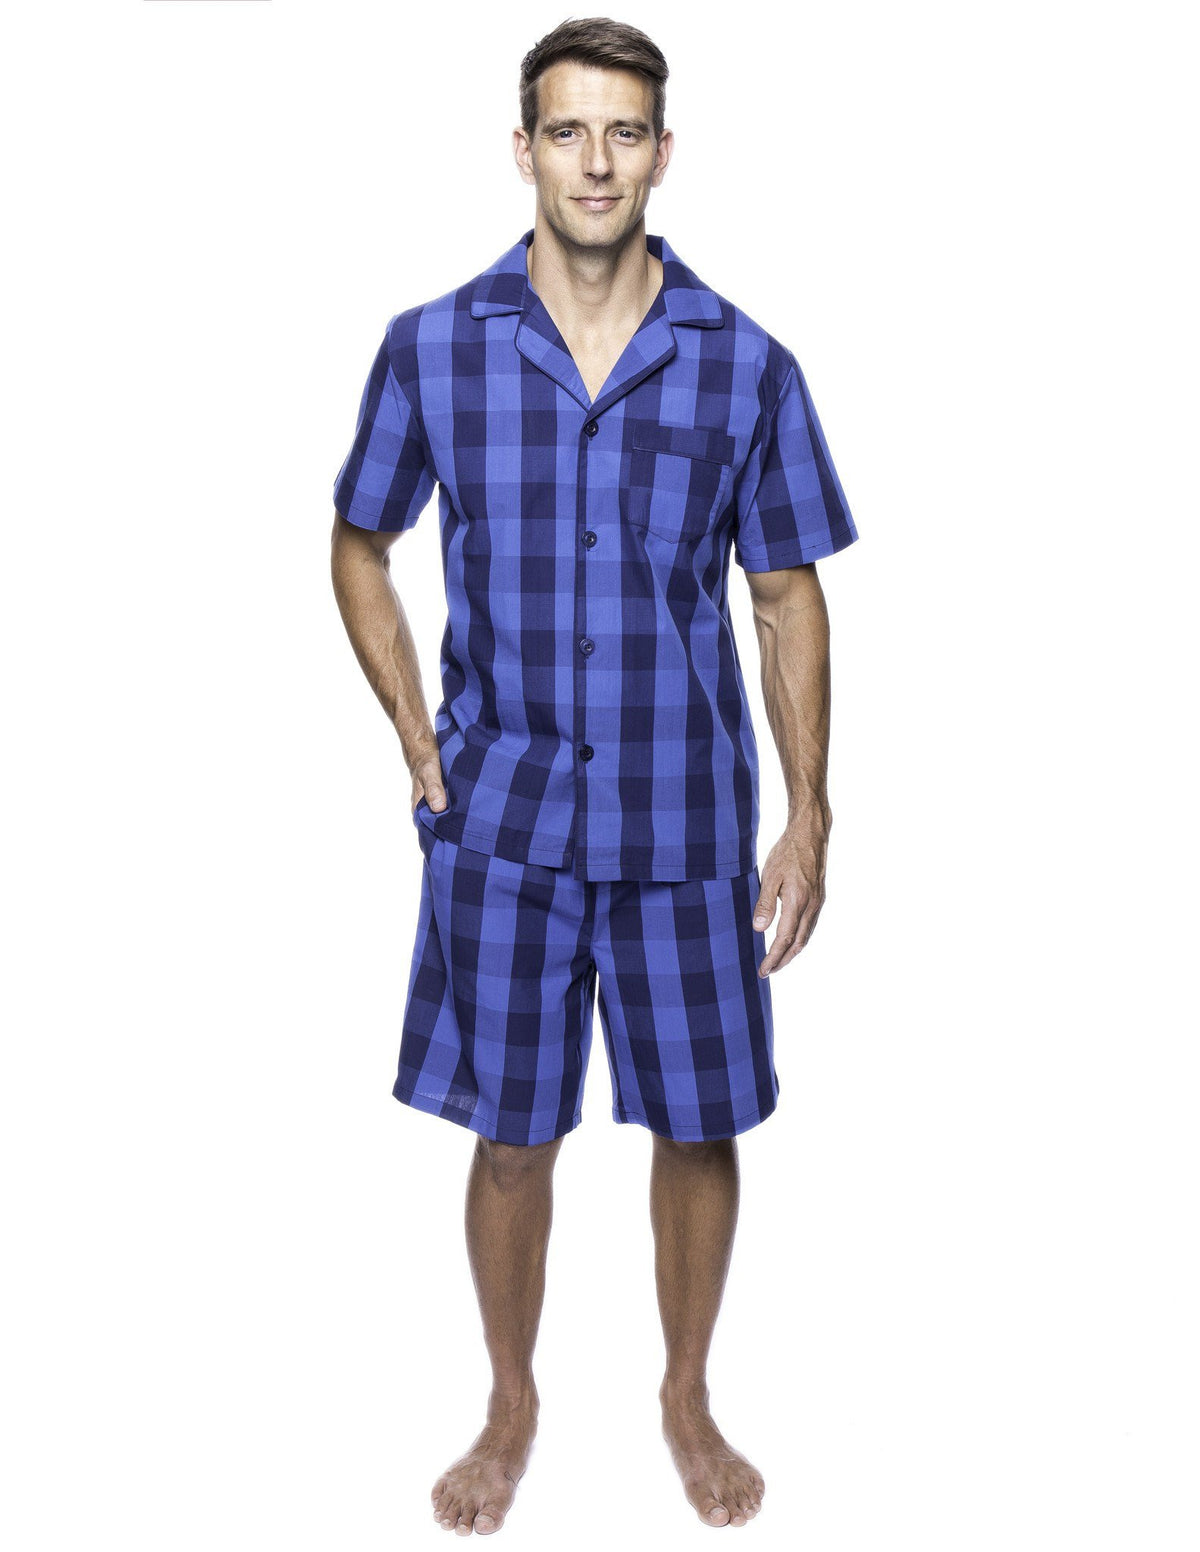 Men's 100% Woven Cotton Short Pajama Sleepwear Set - Gingham Navy/Blue